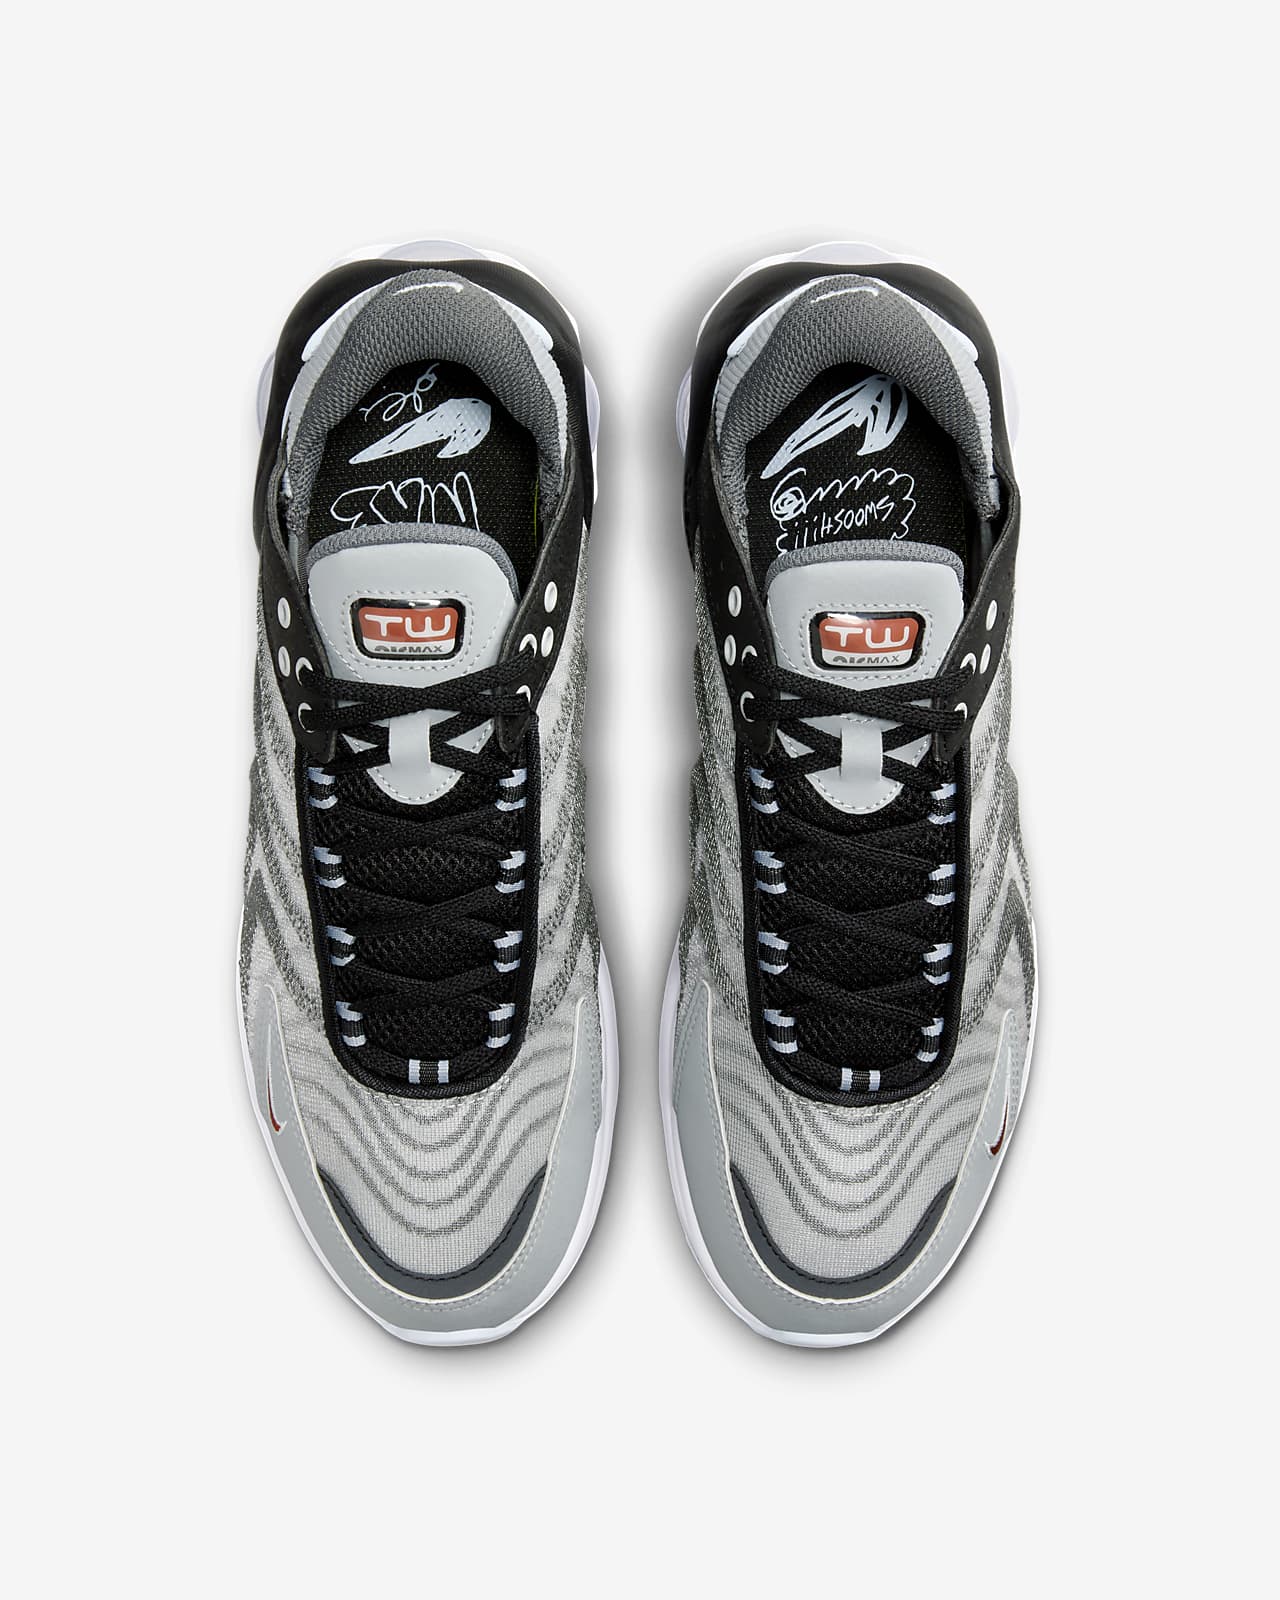 Nike Air Max TW Men's Shoes